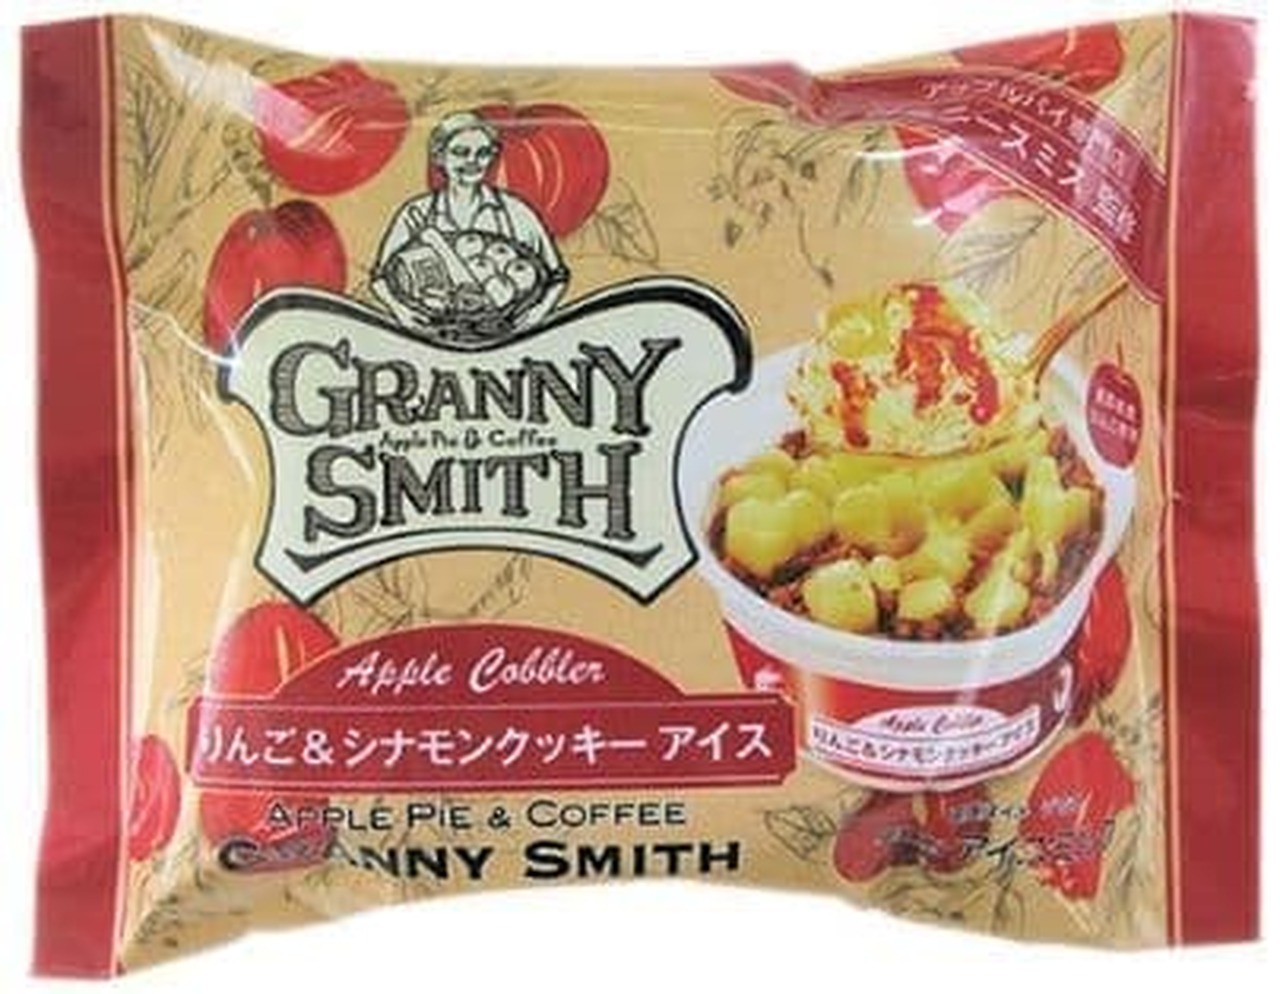 FamilyMart "Granny Smith Apple & Cinnamon Cookie Ice"